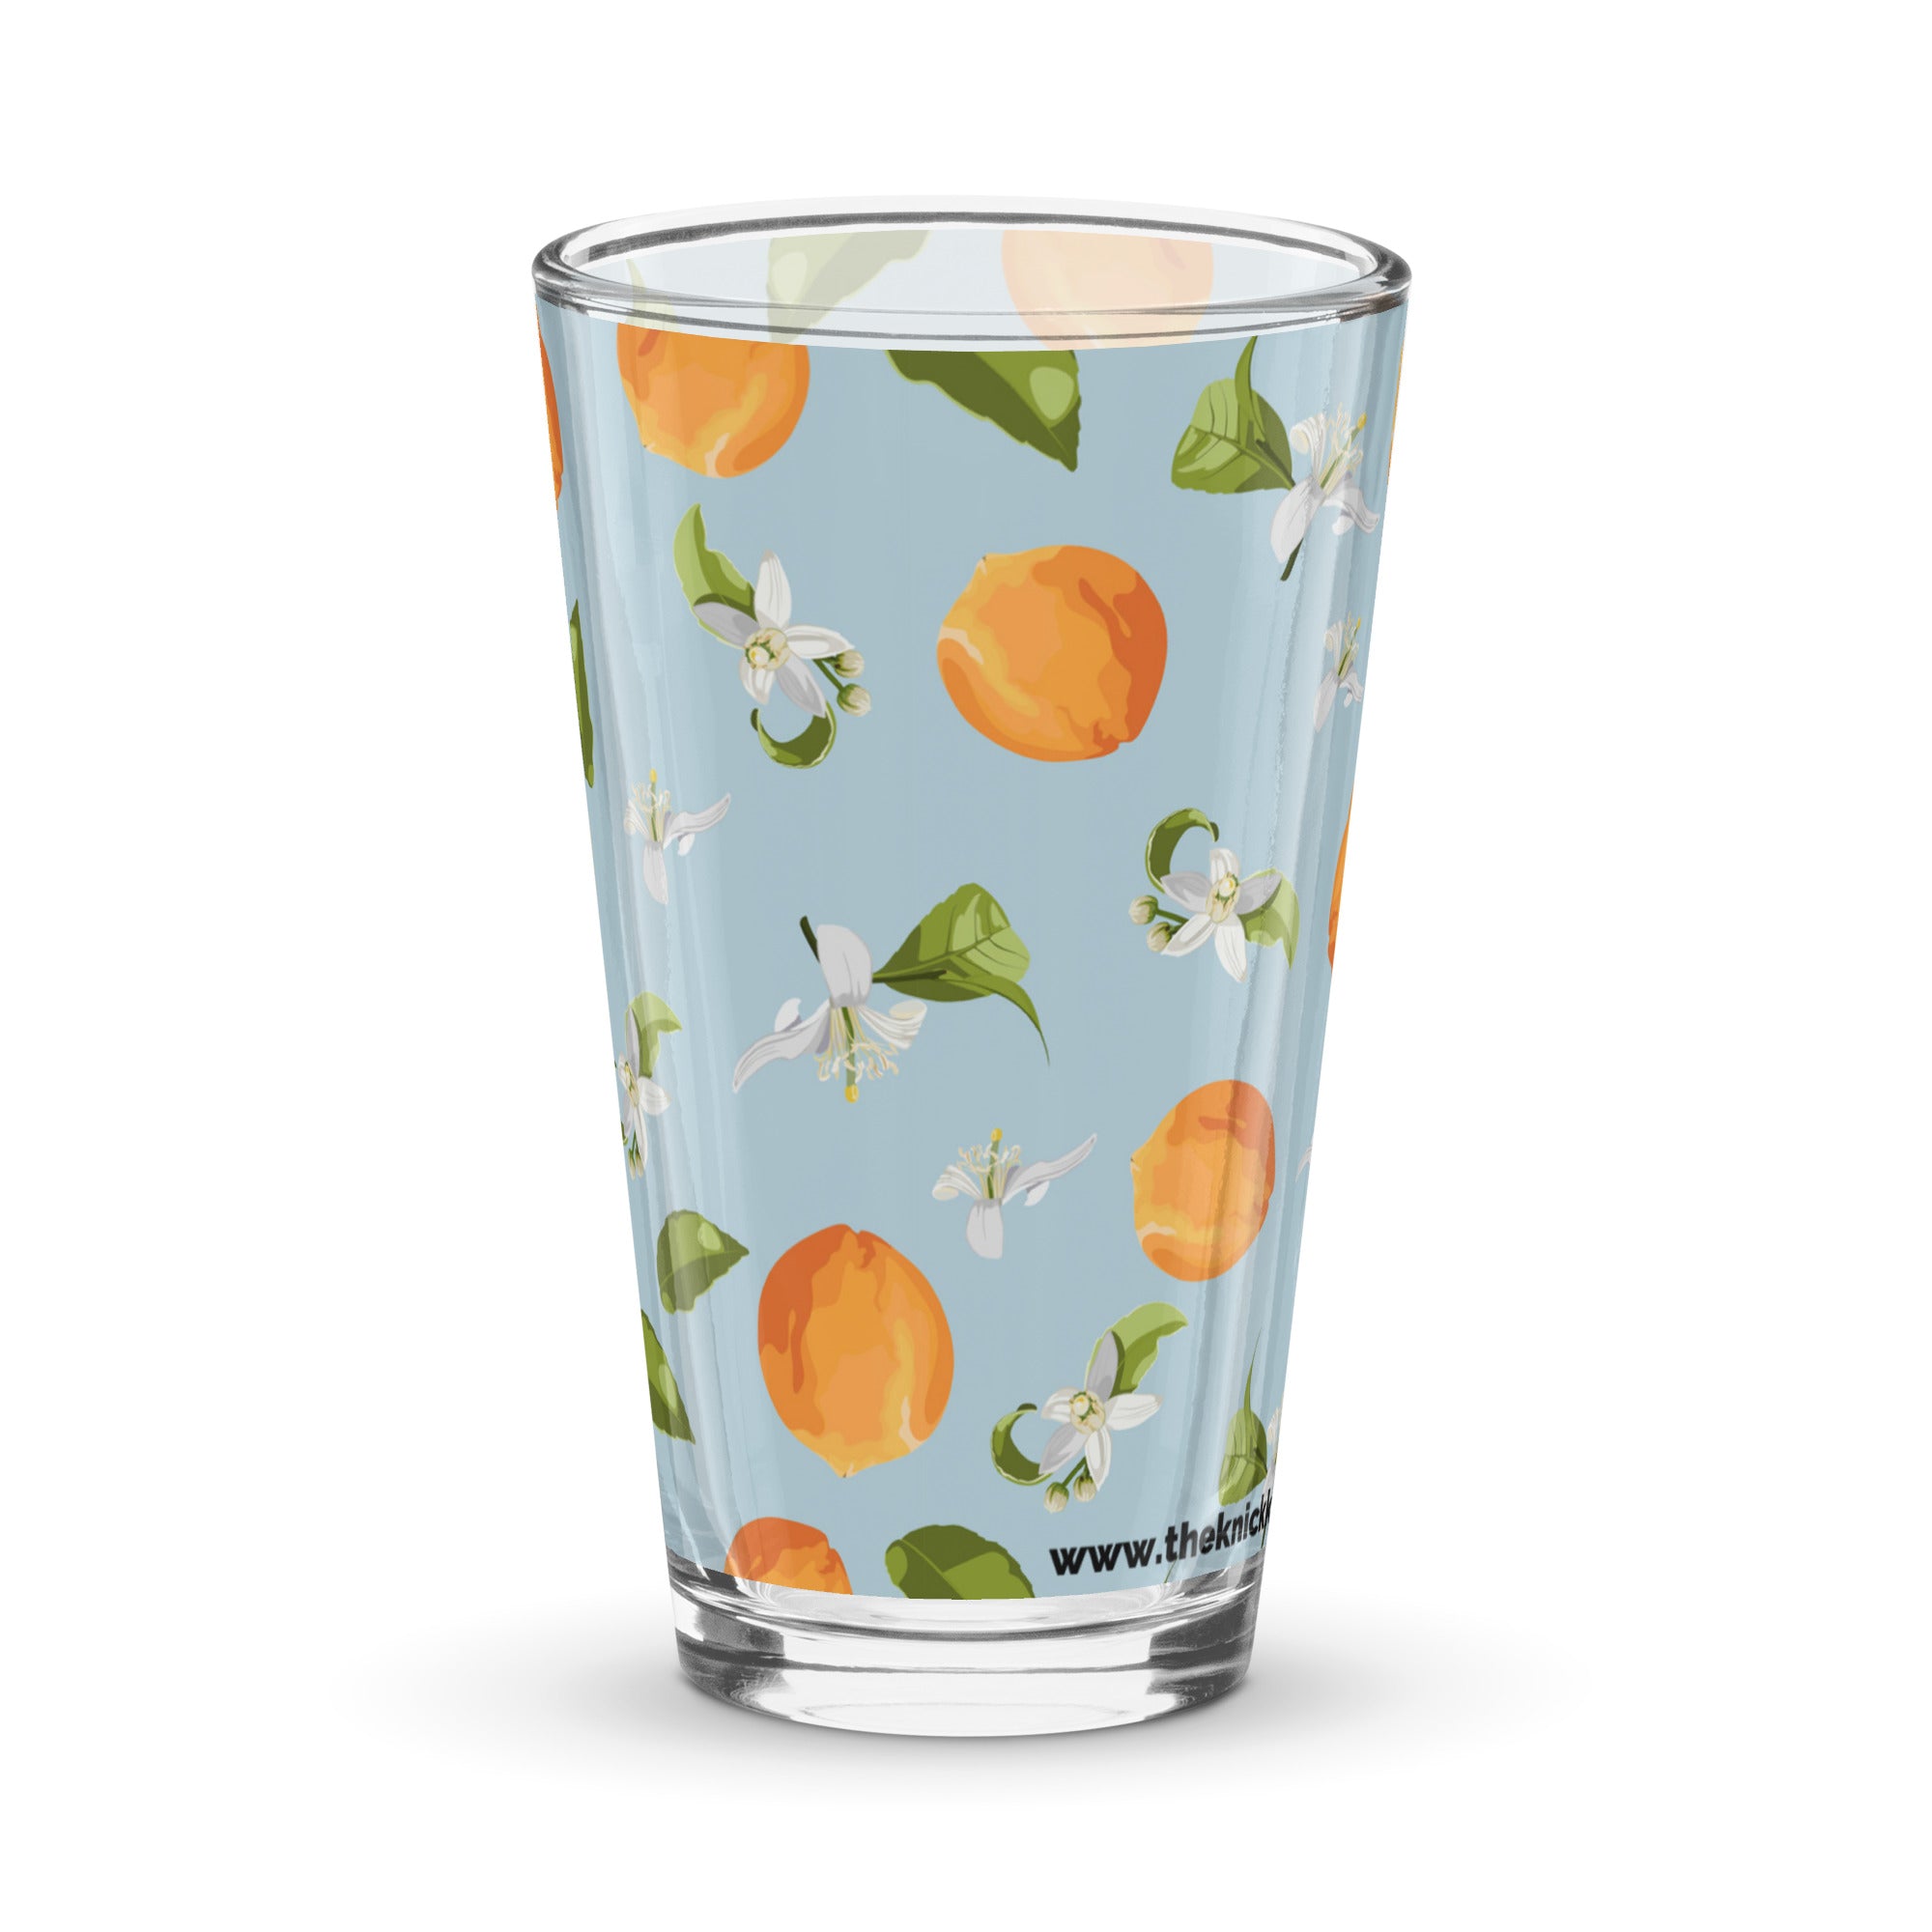 Shaker Pint Glass (16oz) - Just Peachy